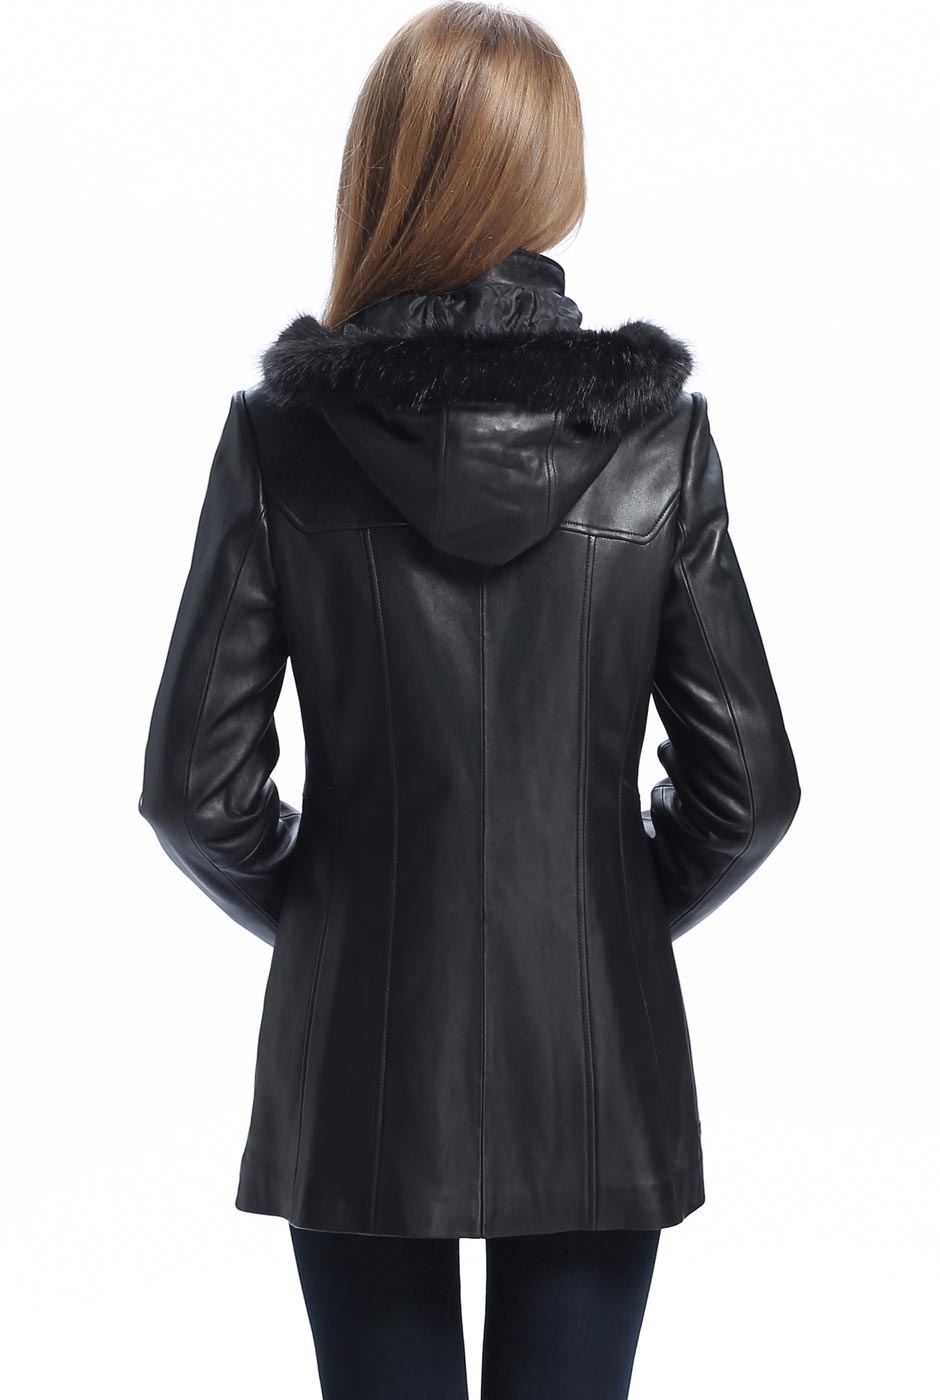 BGSD Women Amanda New Zealand Lambskin Leather Toggle Coat